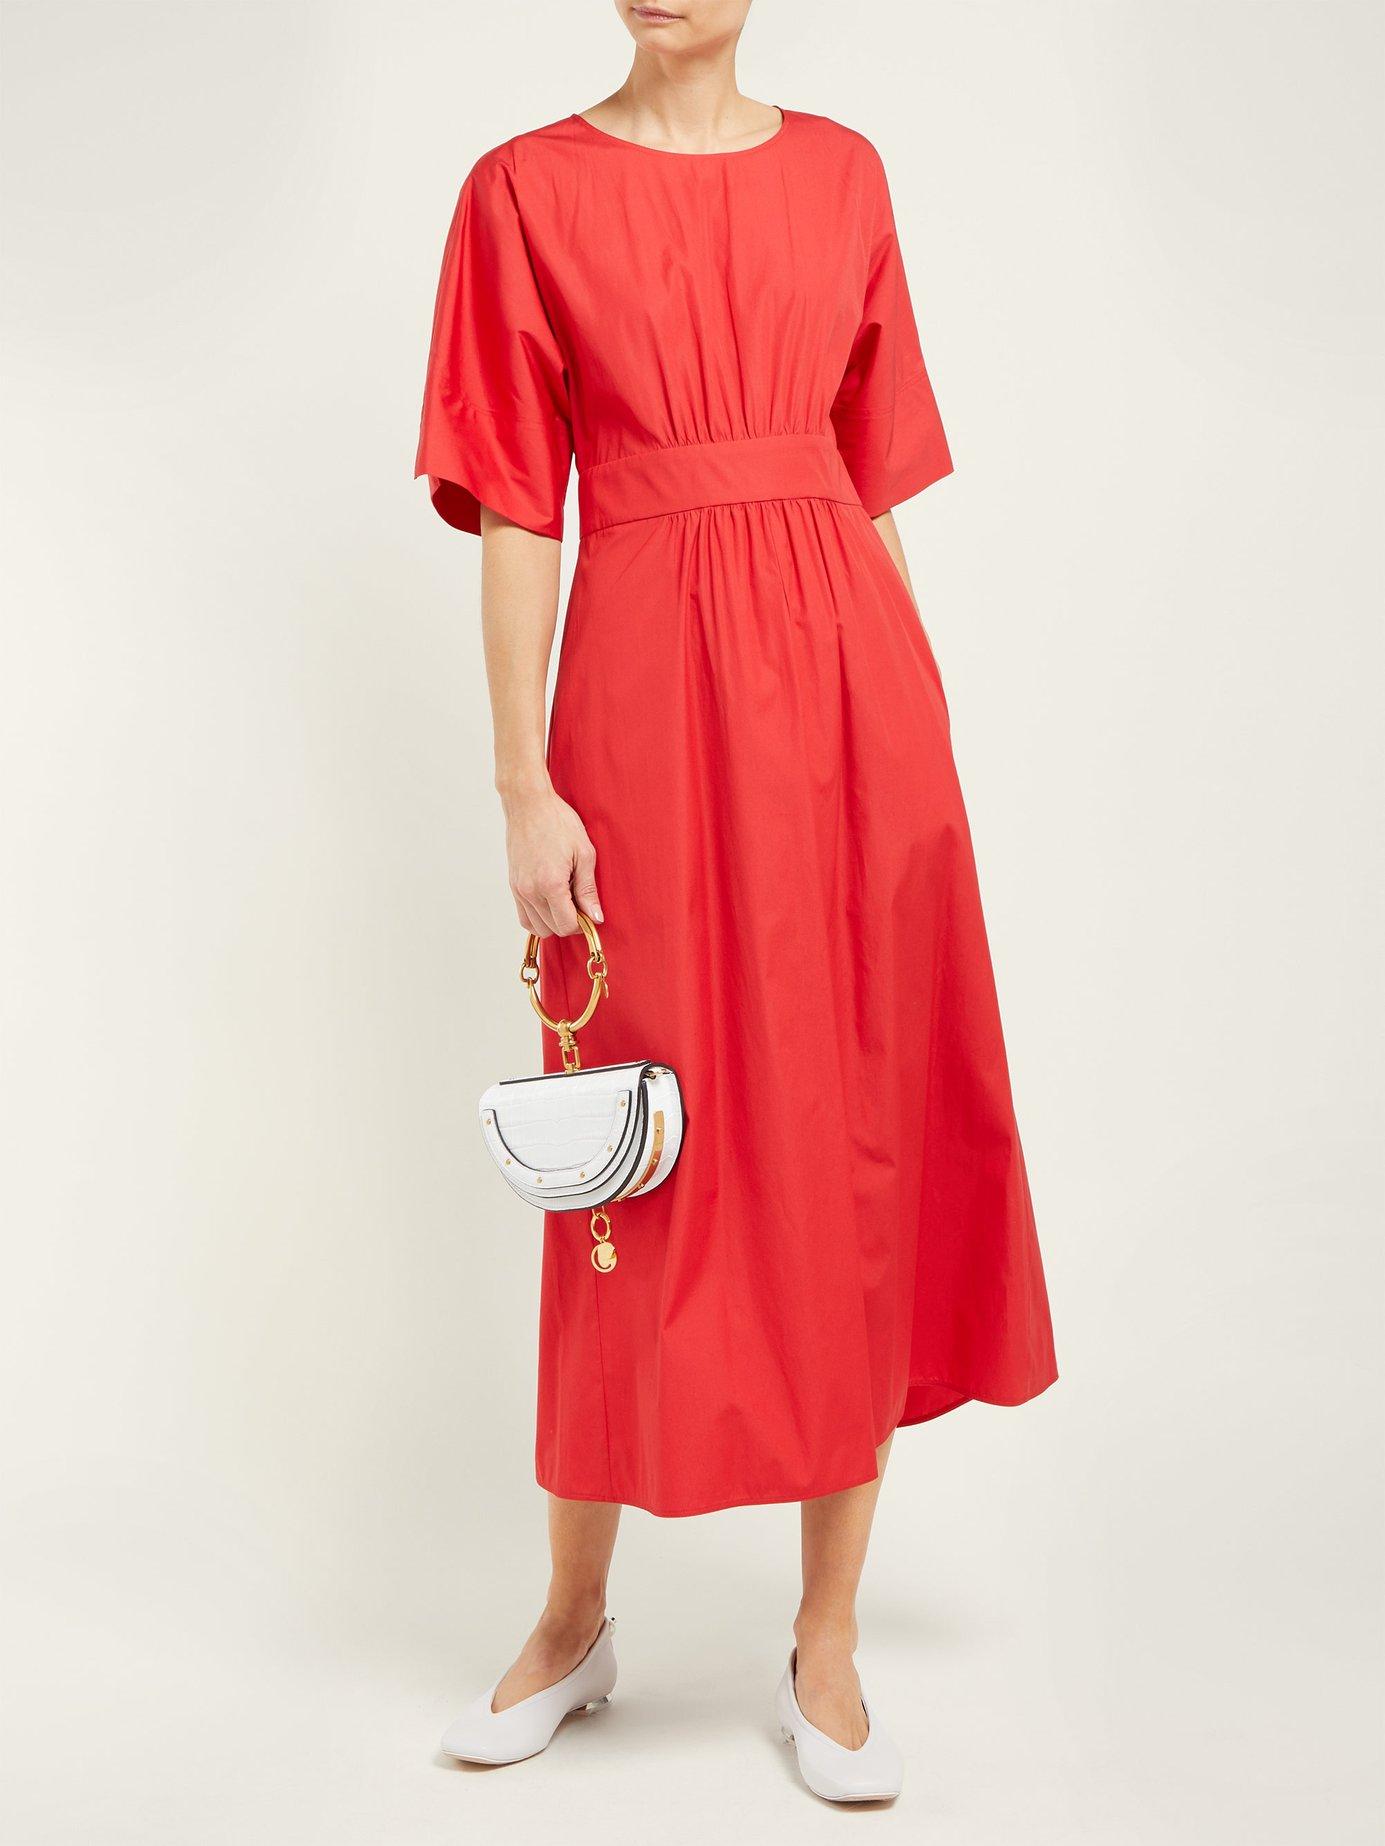 Max Mara Studio Cotton Cima Dress in Red - Lyst